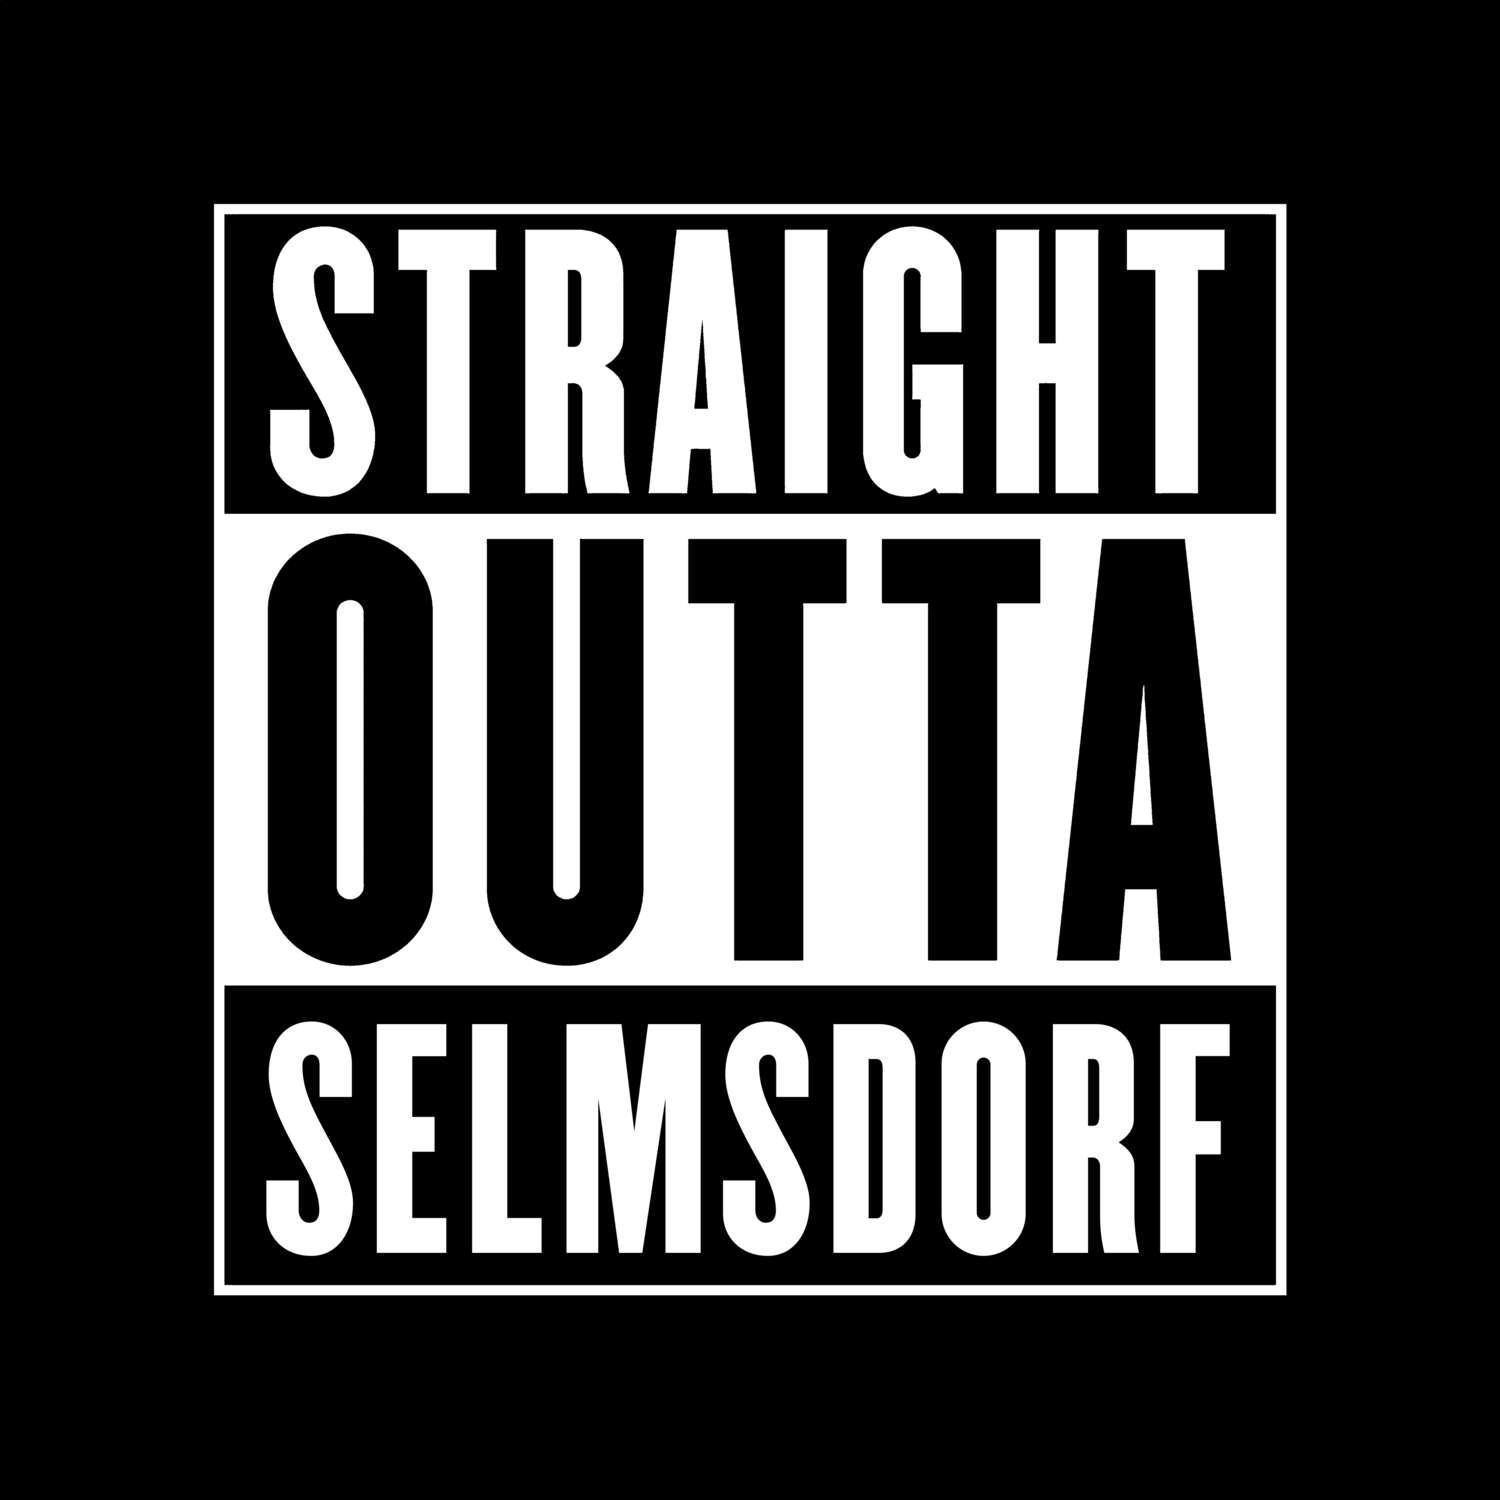 Selmsdorf T-Shirt »Straight Outta«